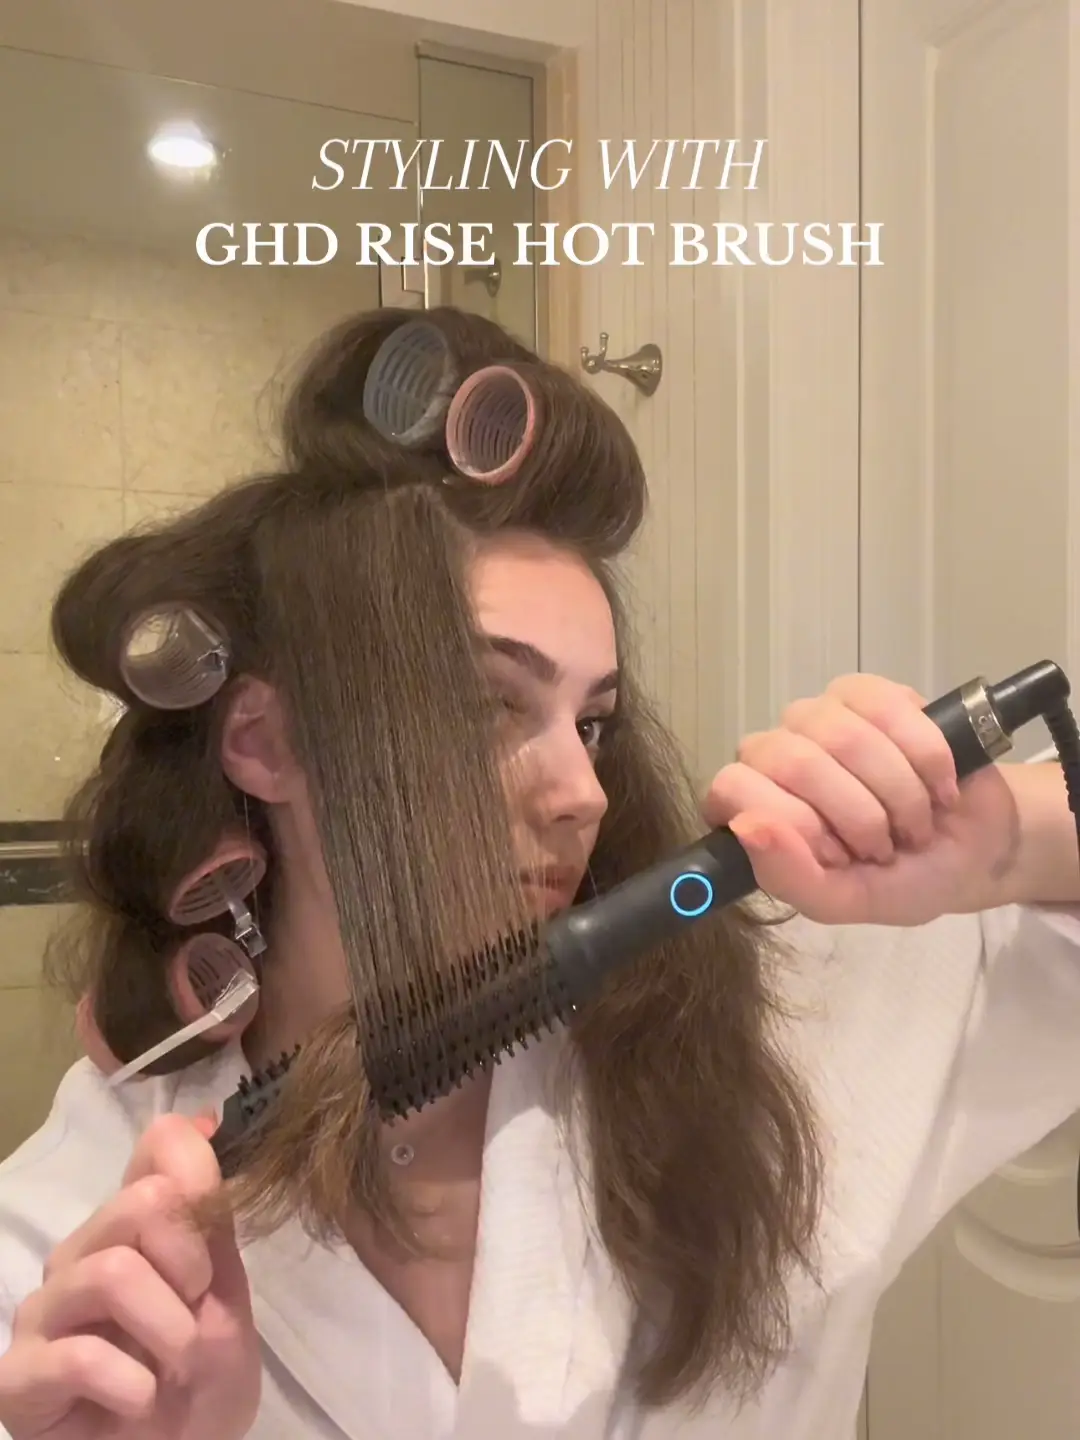 GHD GLIDE VS GHD PLATINUM PLUS ON CURLY HAIR - HONEST REVIEW 